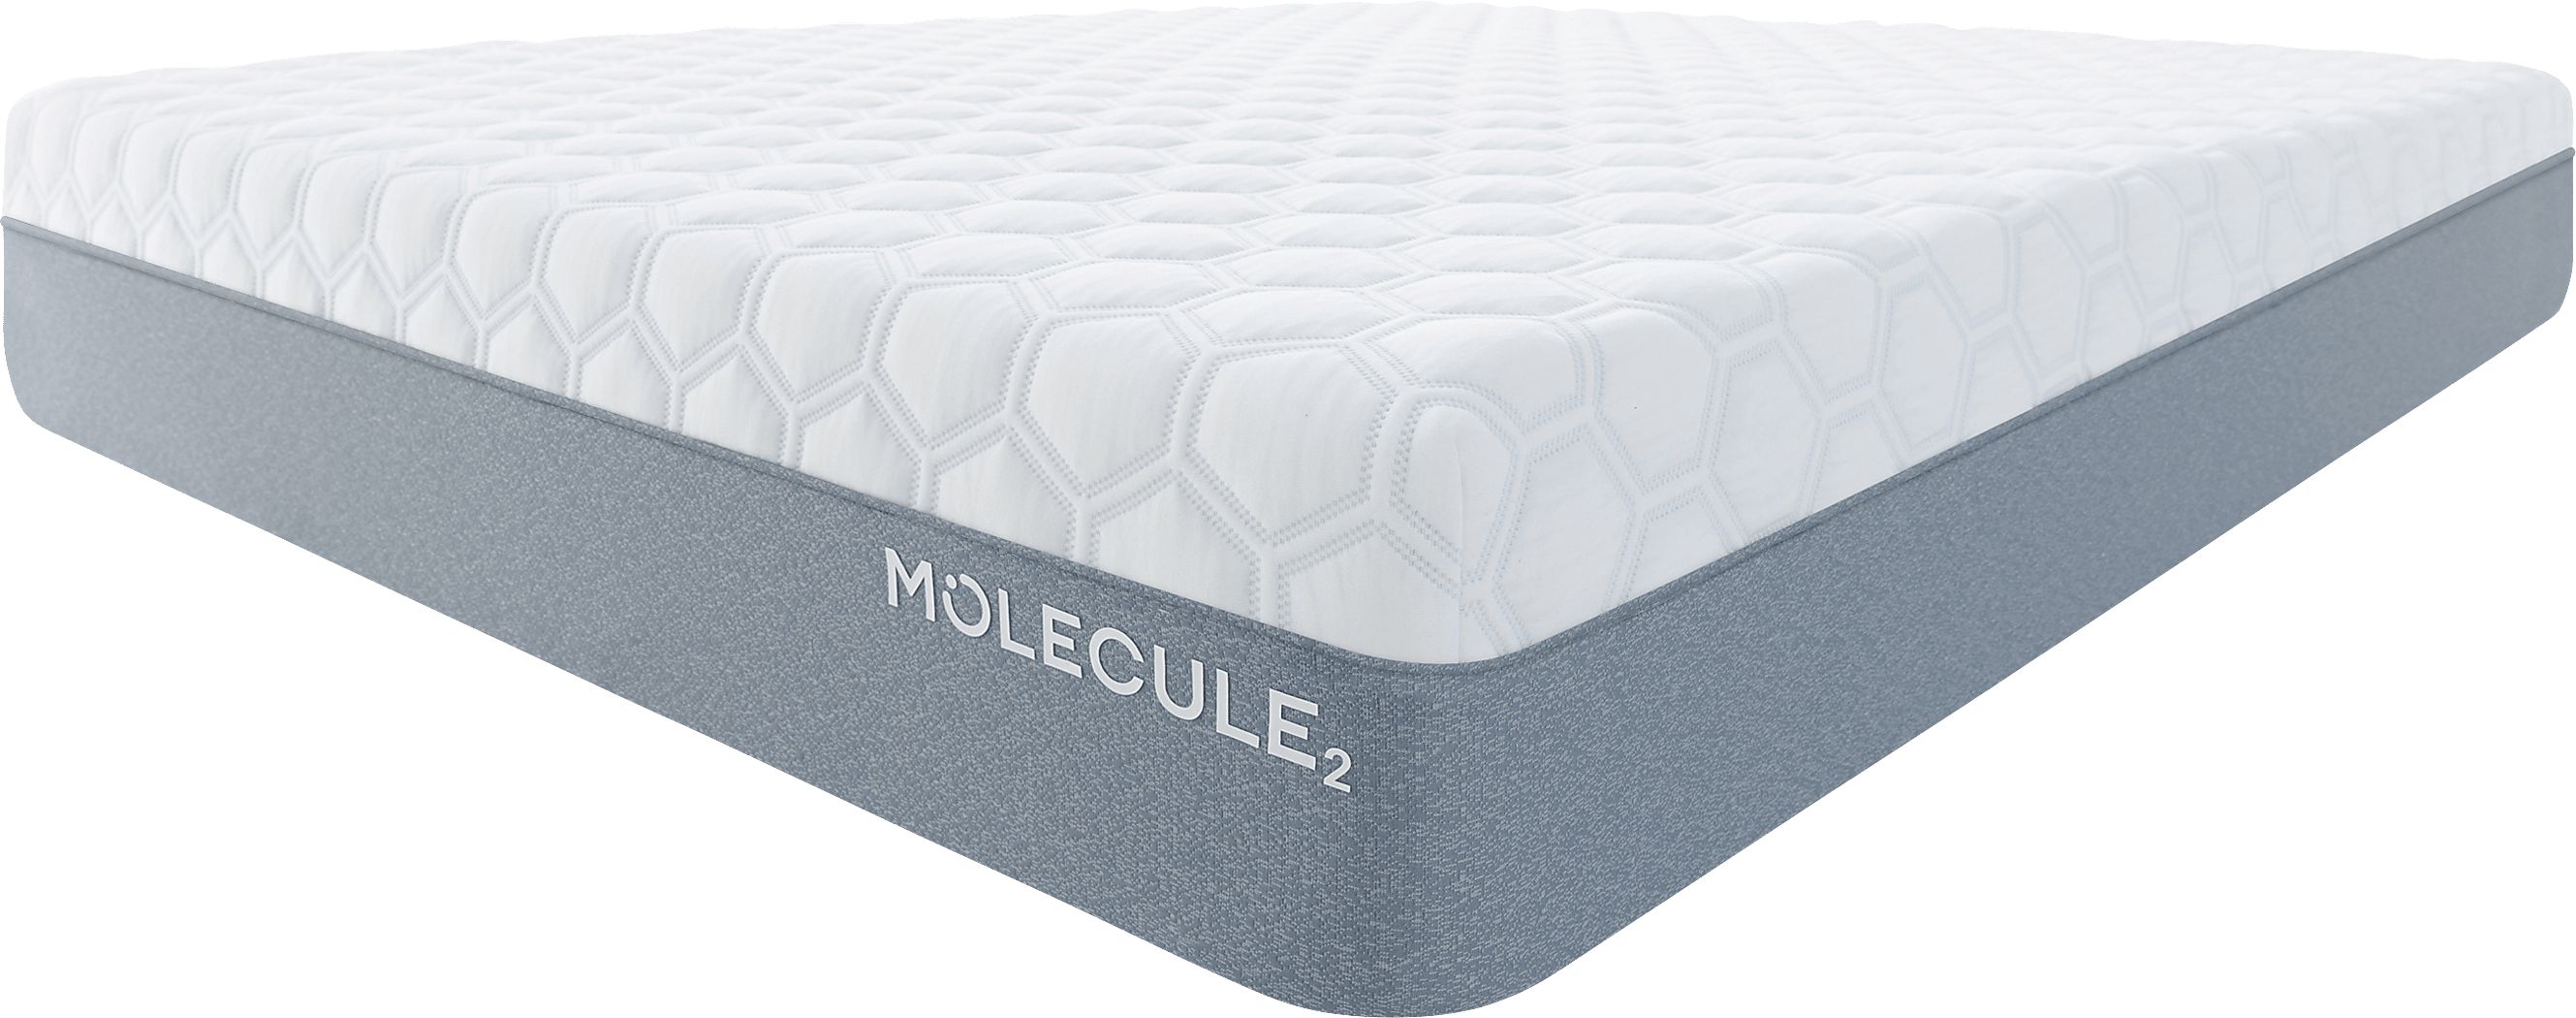 microban mattress pad does it work